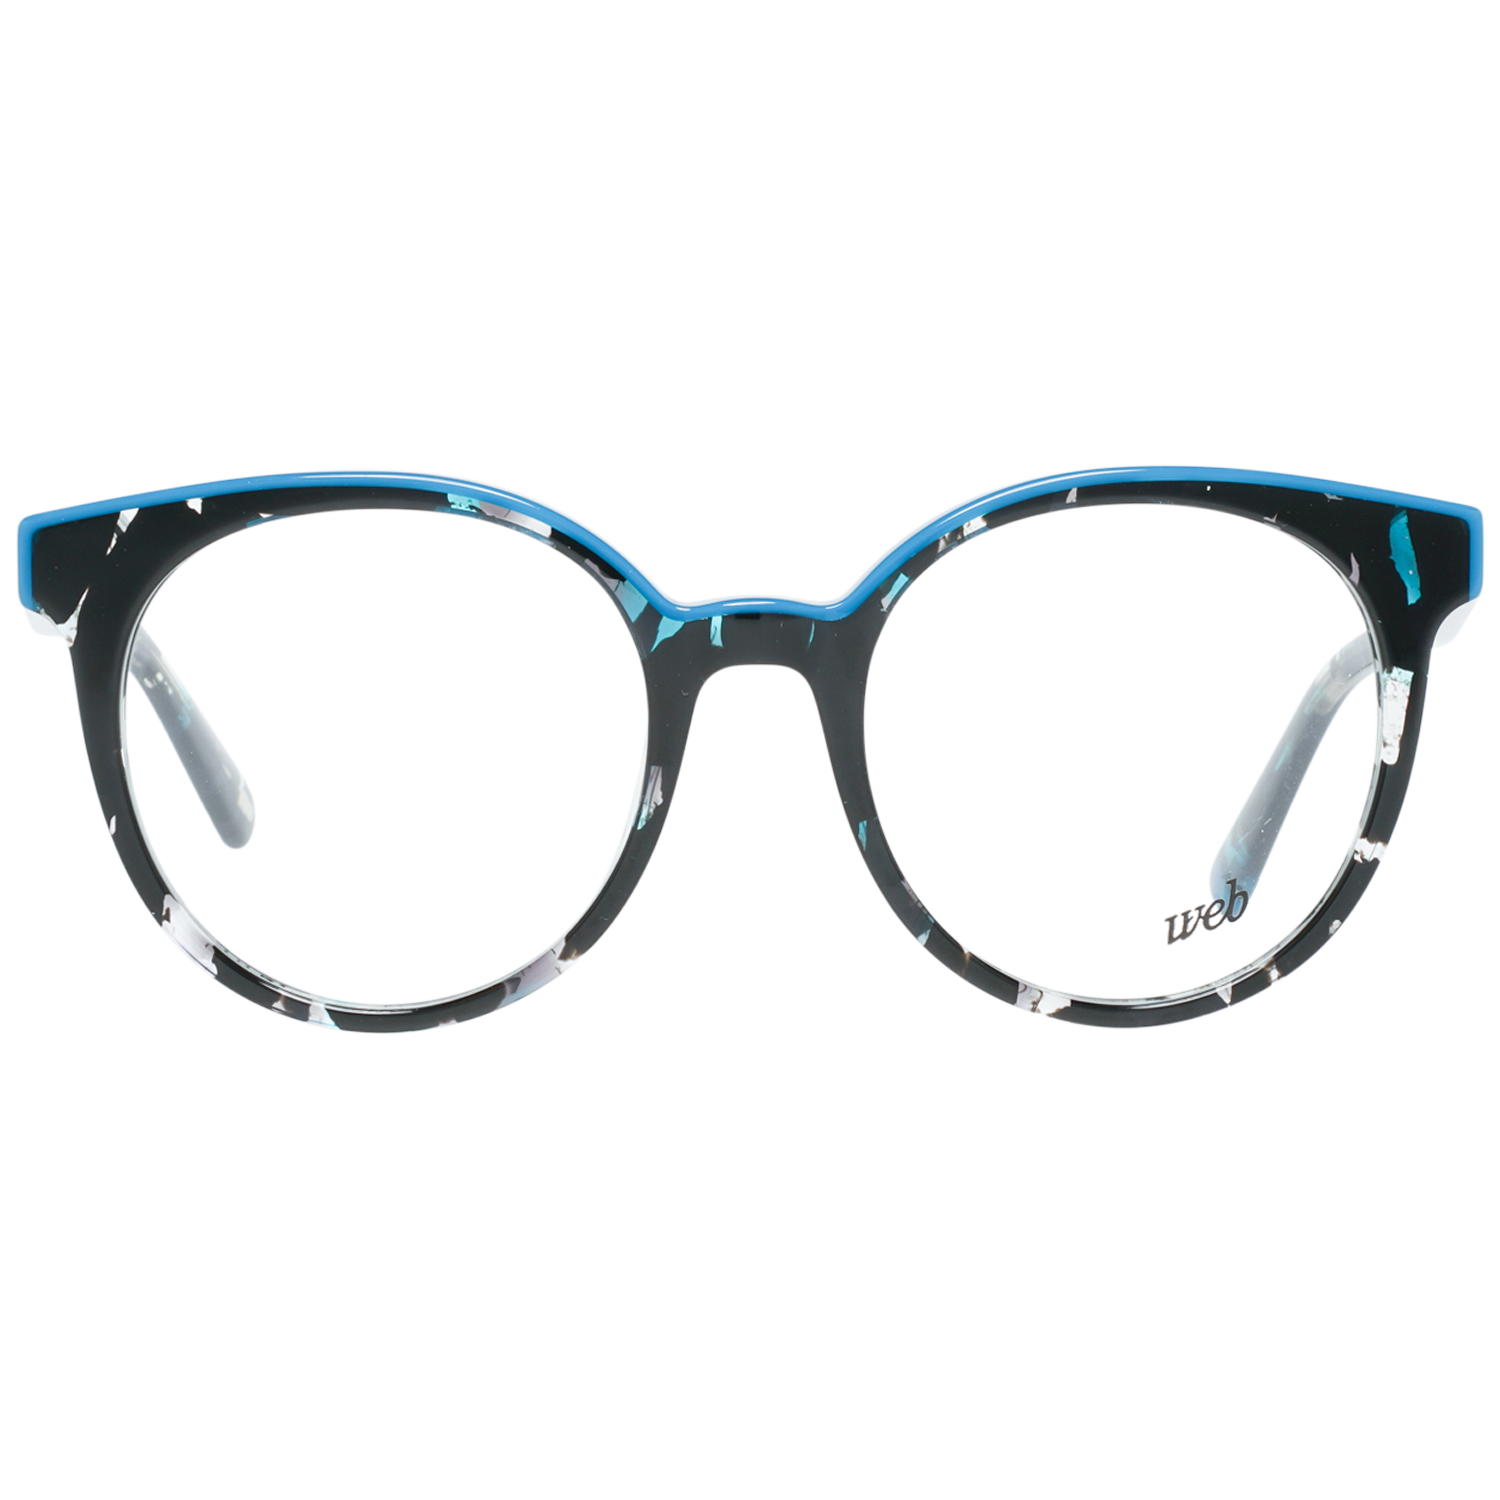 Web Frames Web Glasses Optical Frame WE5227 A55 49 Eyeglasses Eyewear UK USA Australia 